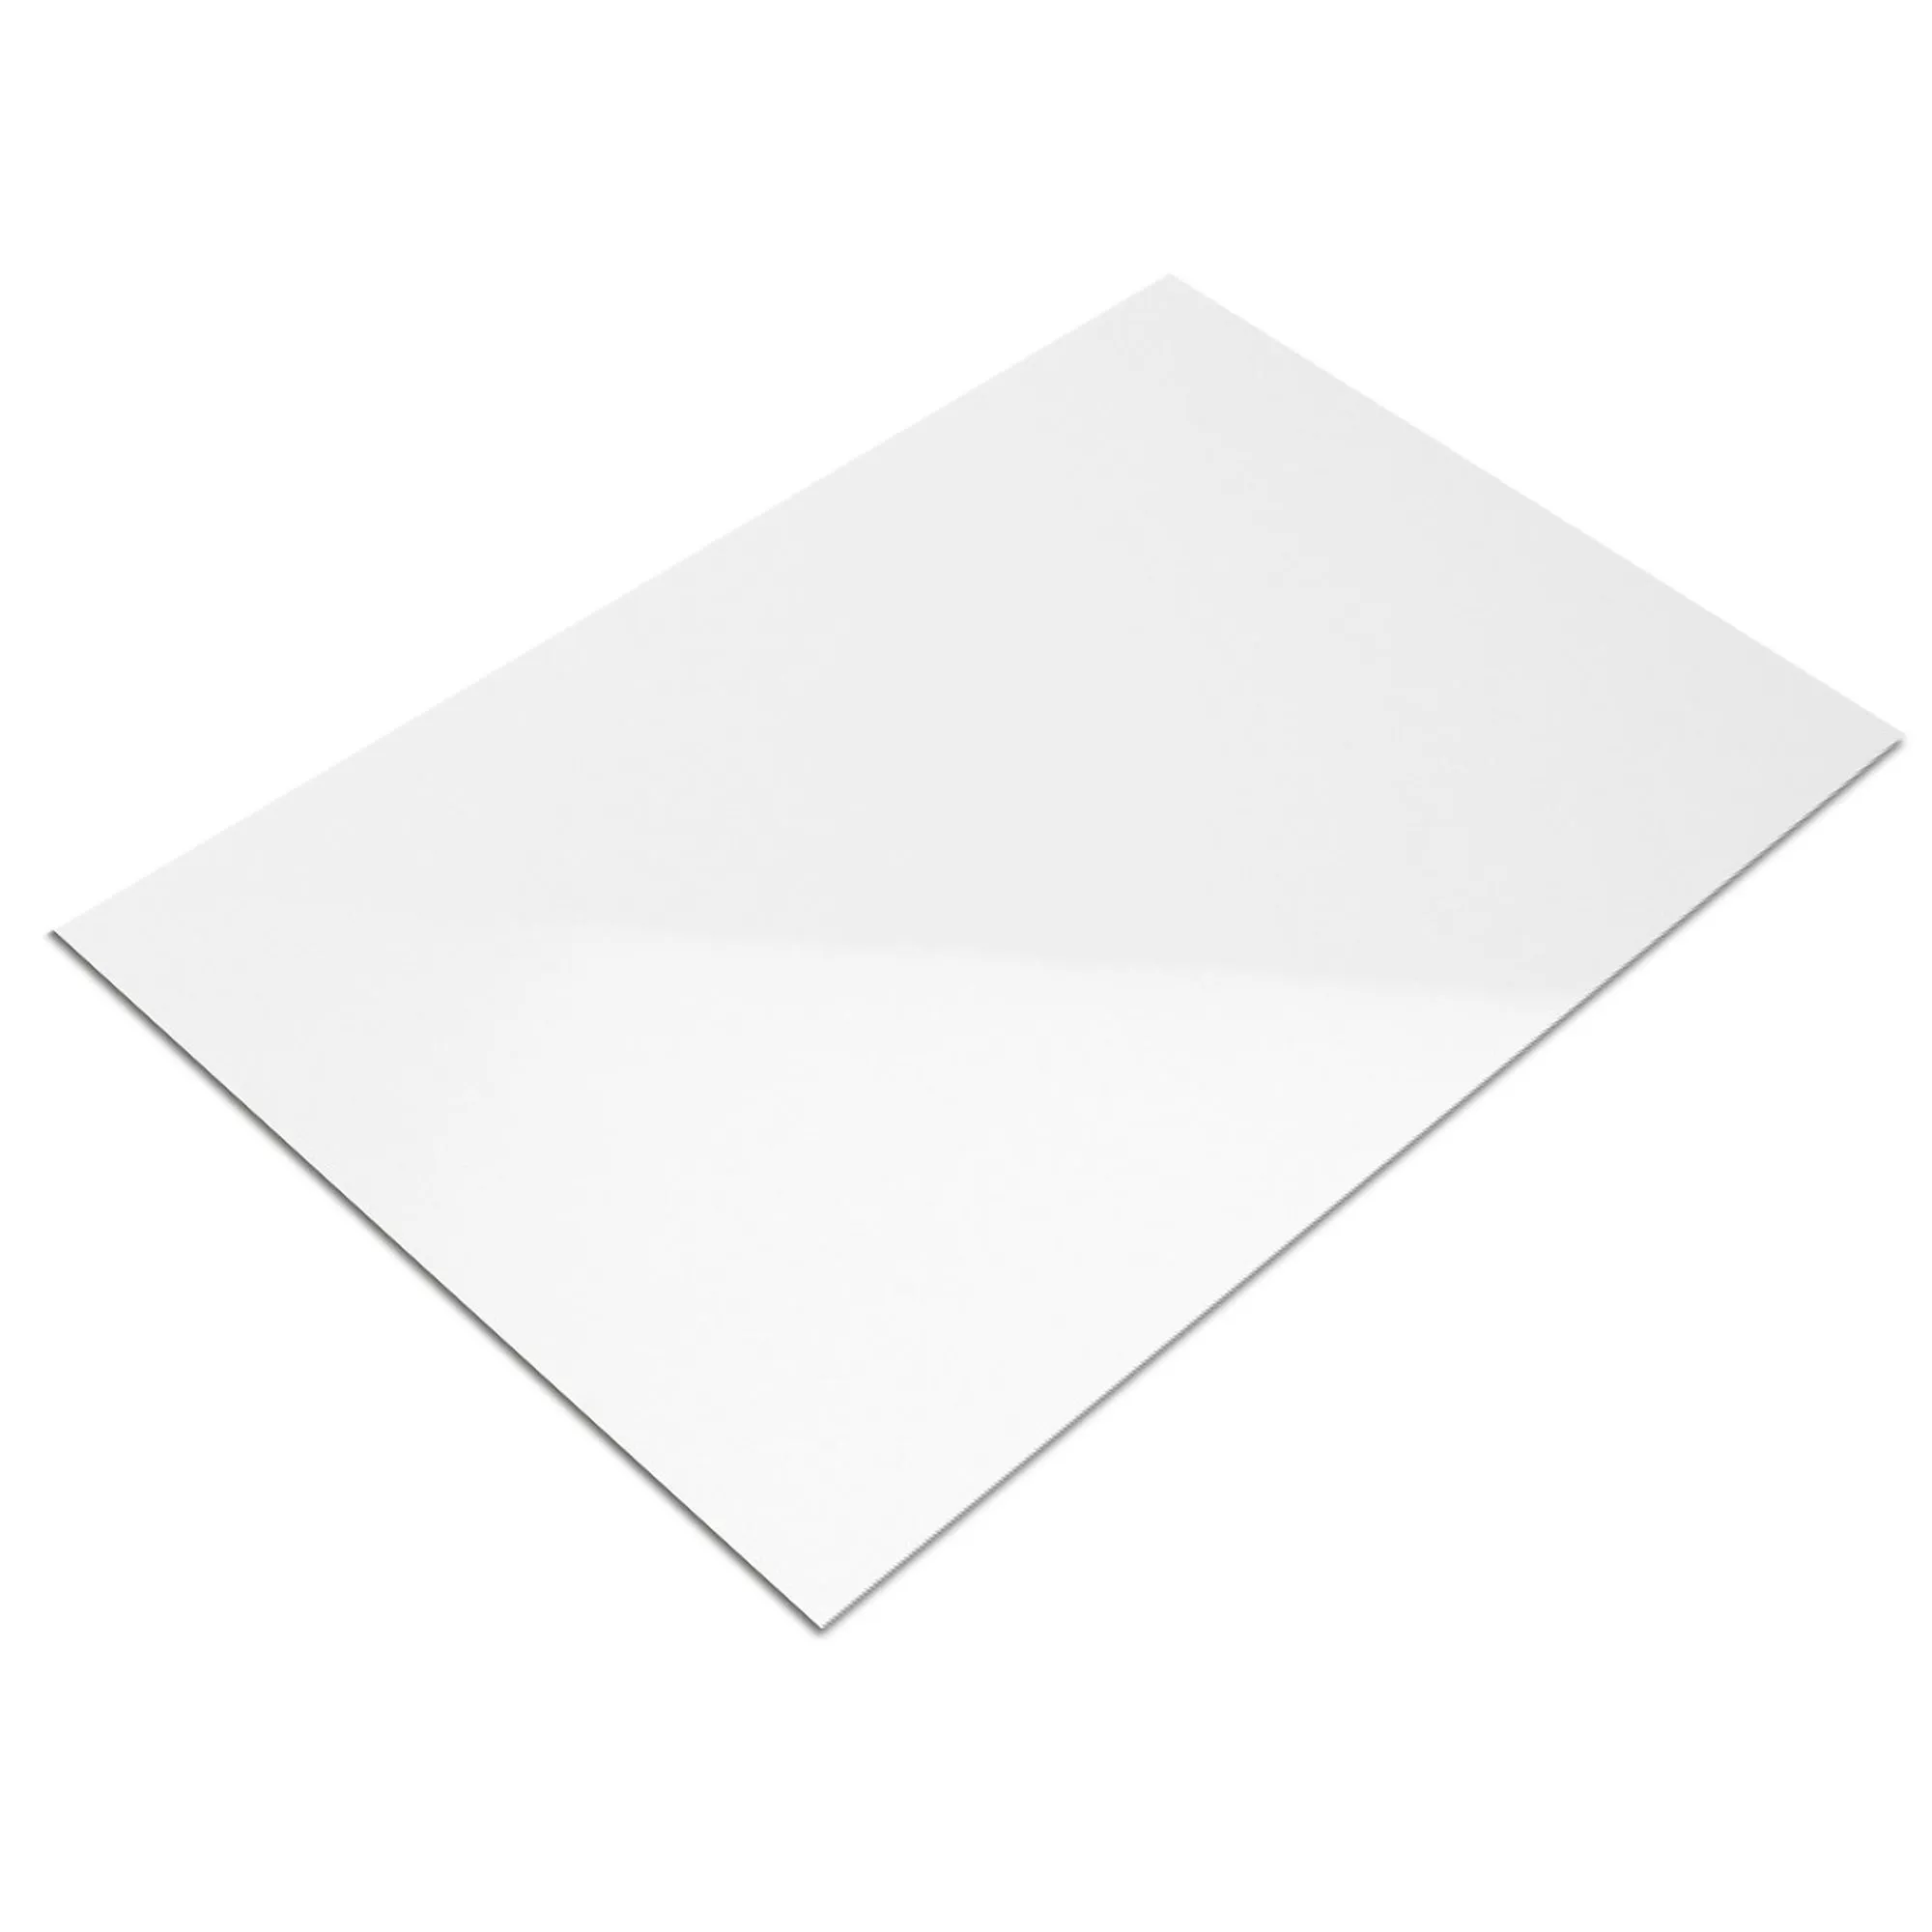 Sample Wall Tiles Fenway White Glossy 20x40cm